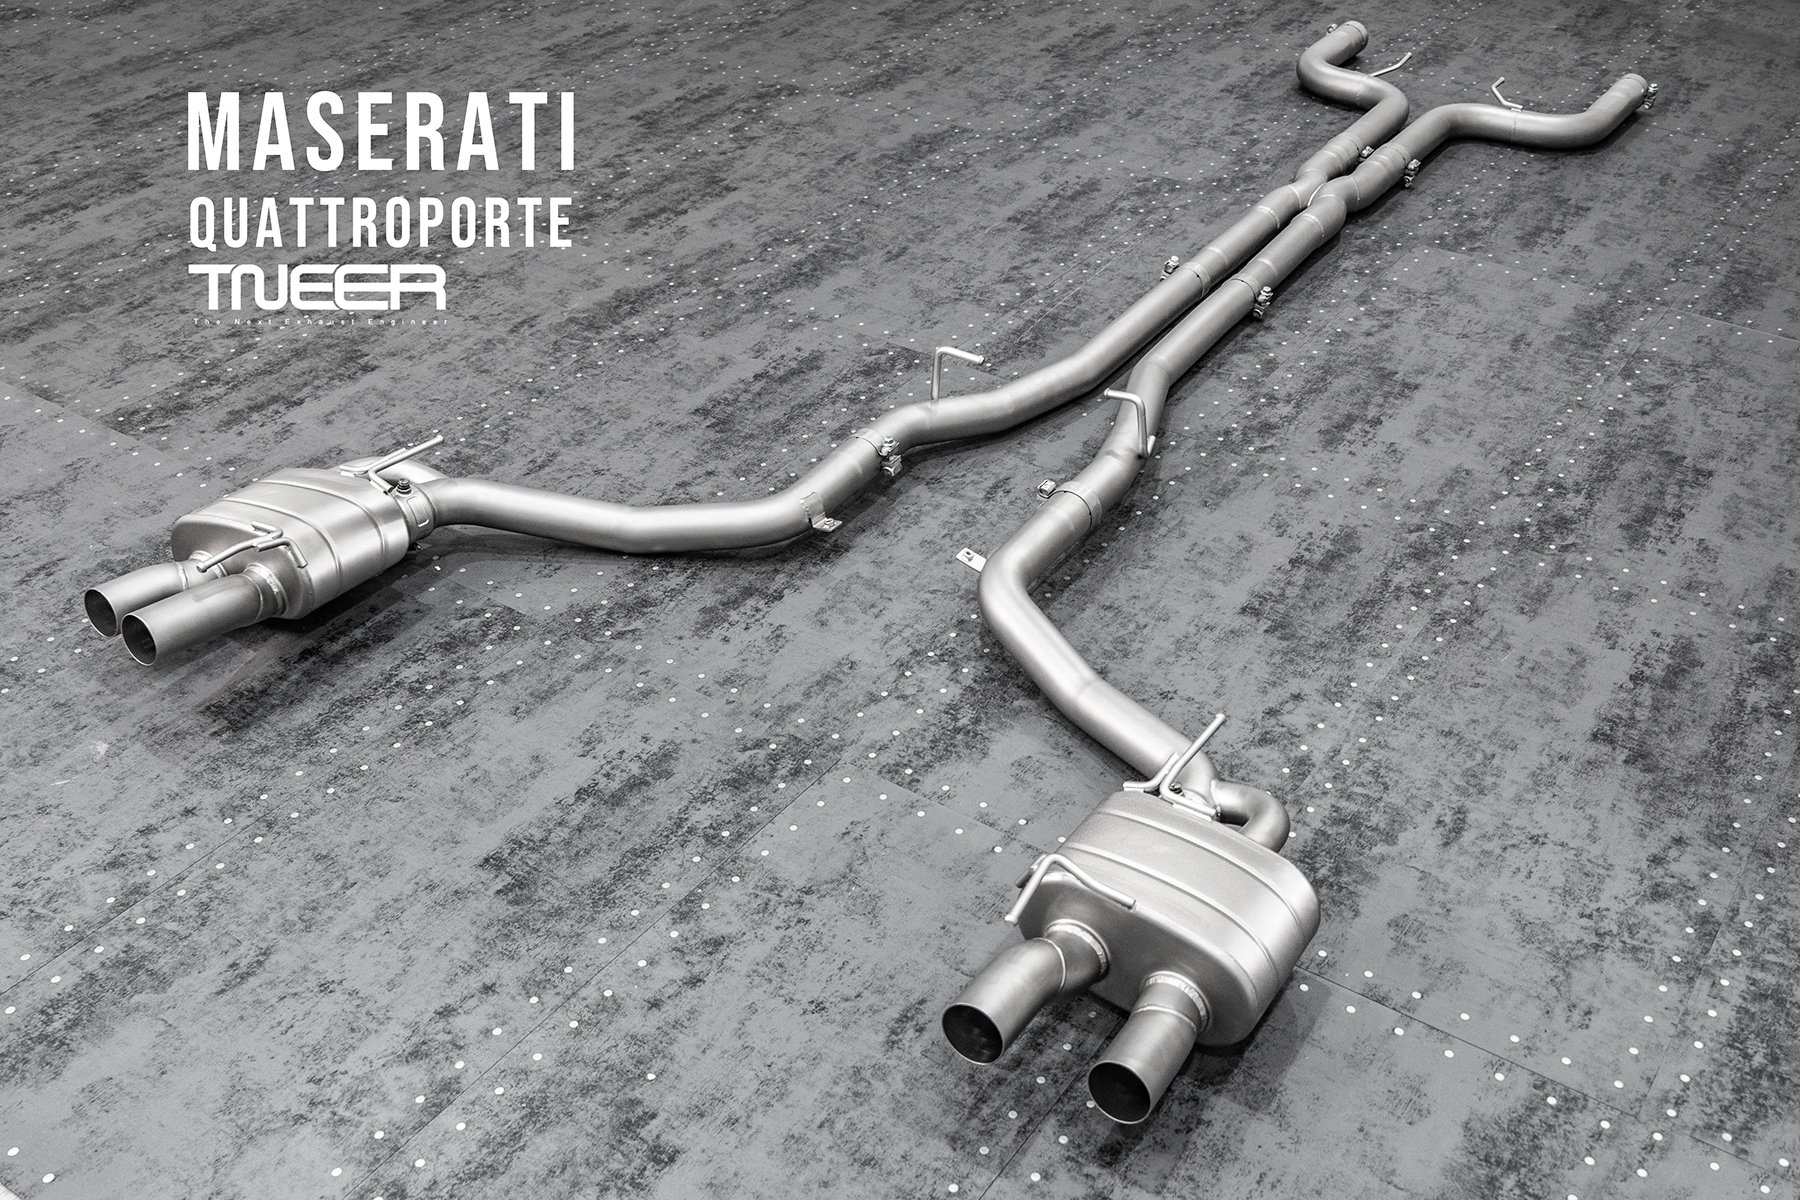 Maserati Quattroporte GTS TNEER High-Performance Downpipes